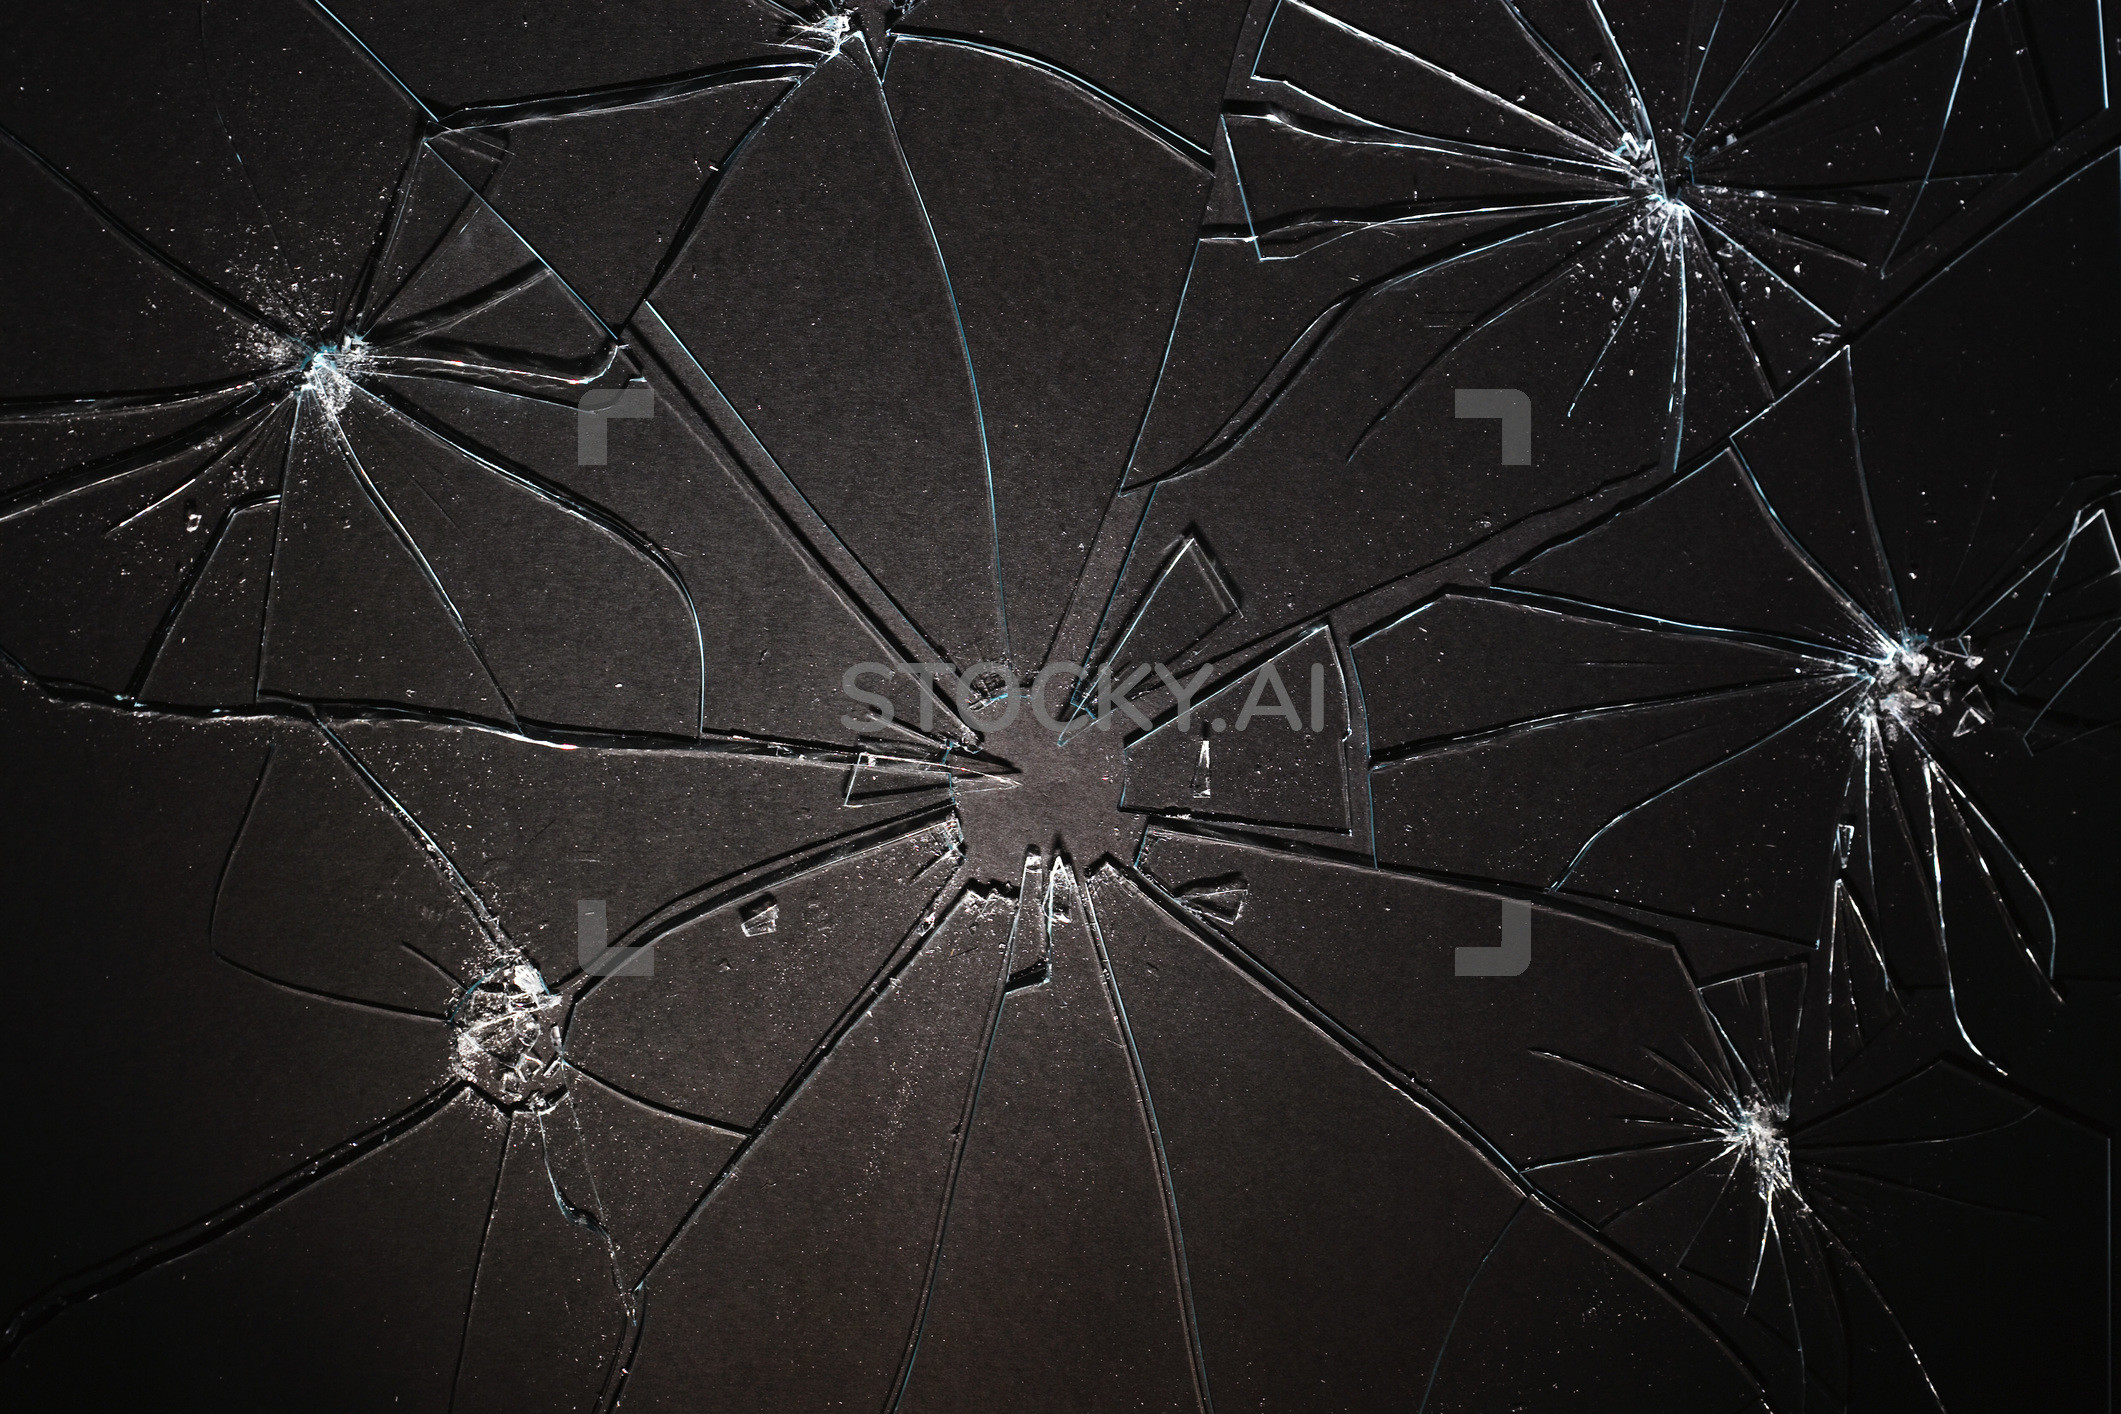 2121x1414 Image of Broken glass pieced together on black background